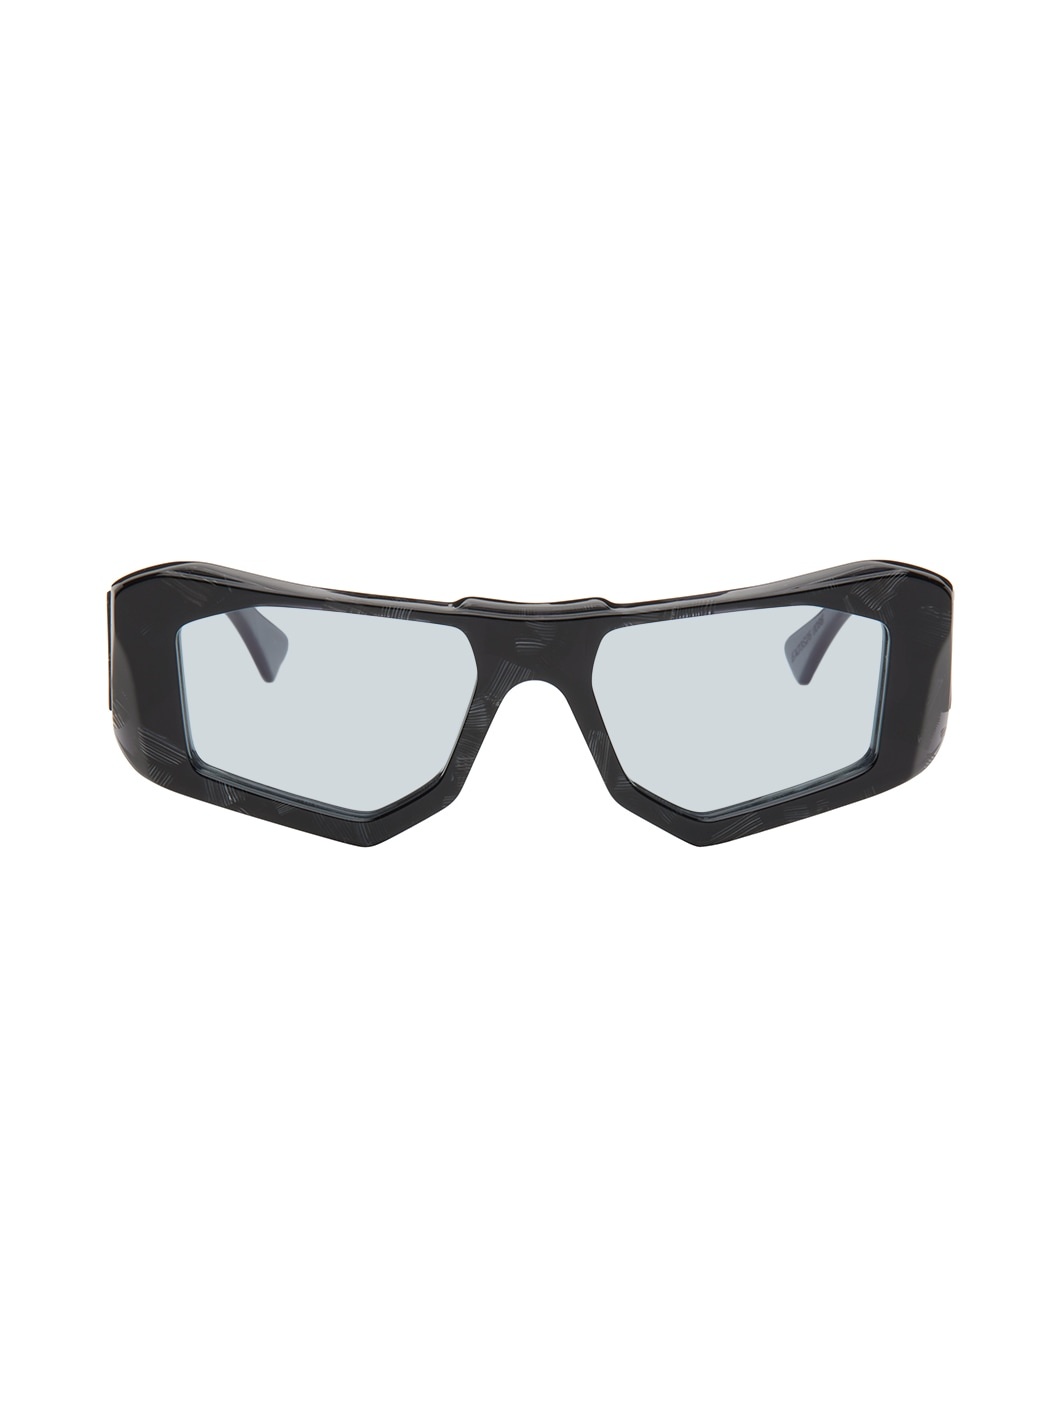 Black F6 Sunglasses - 1